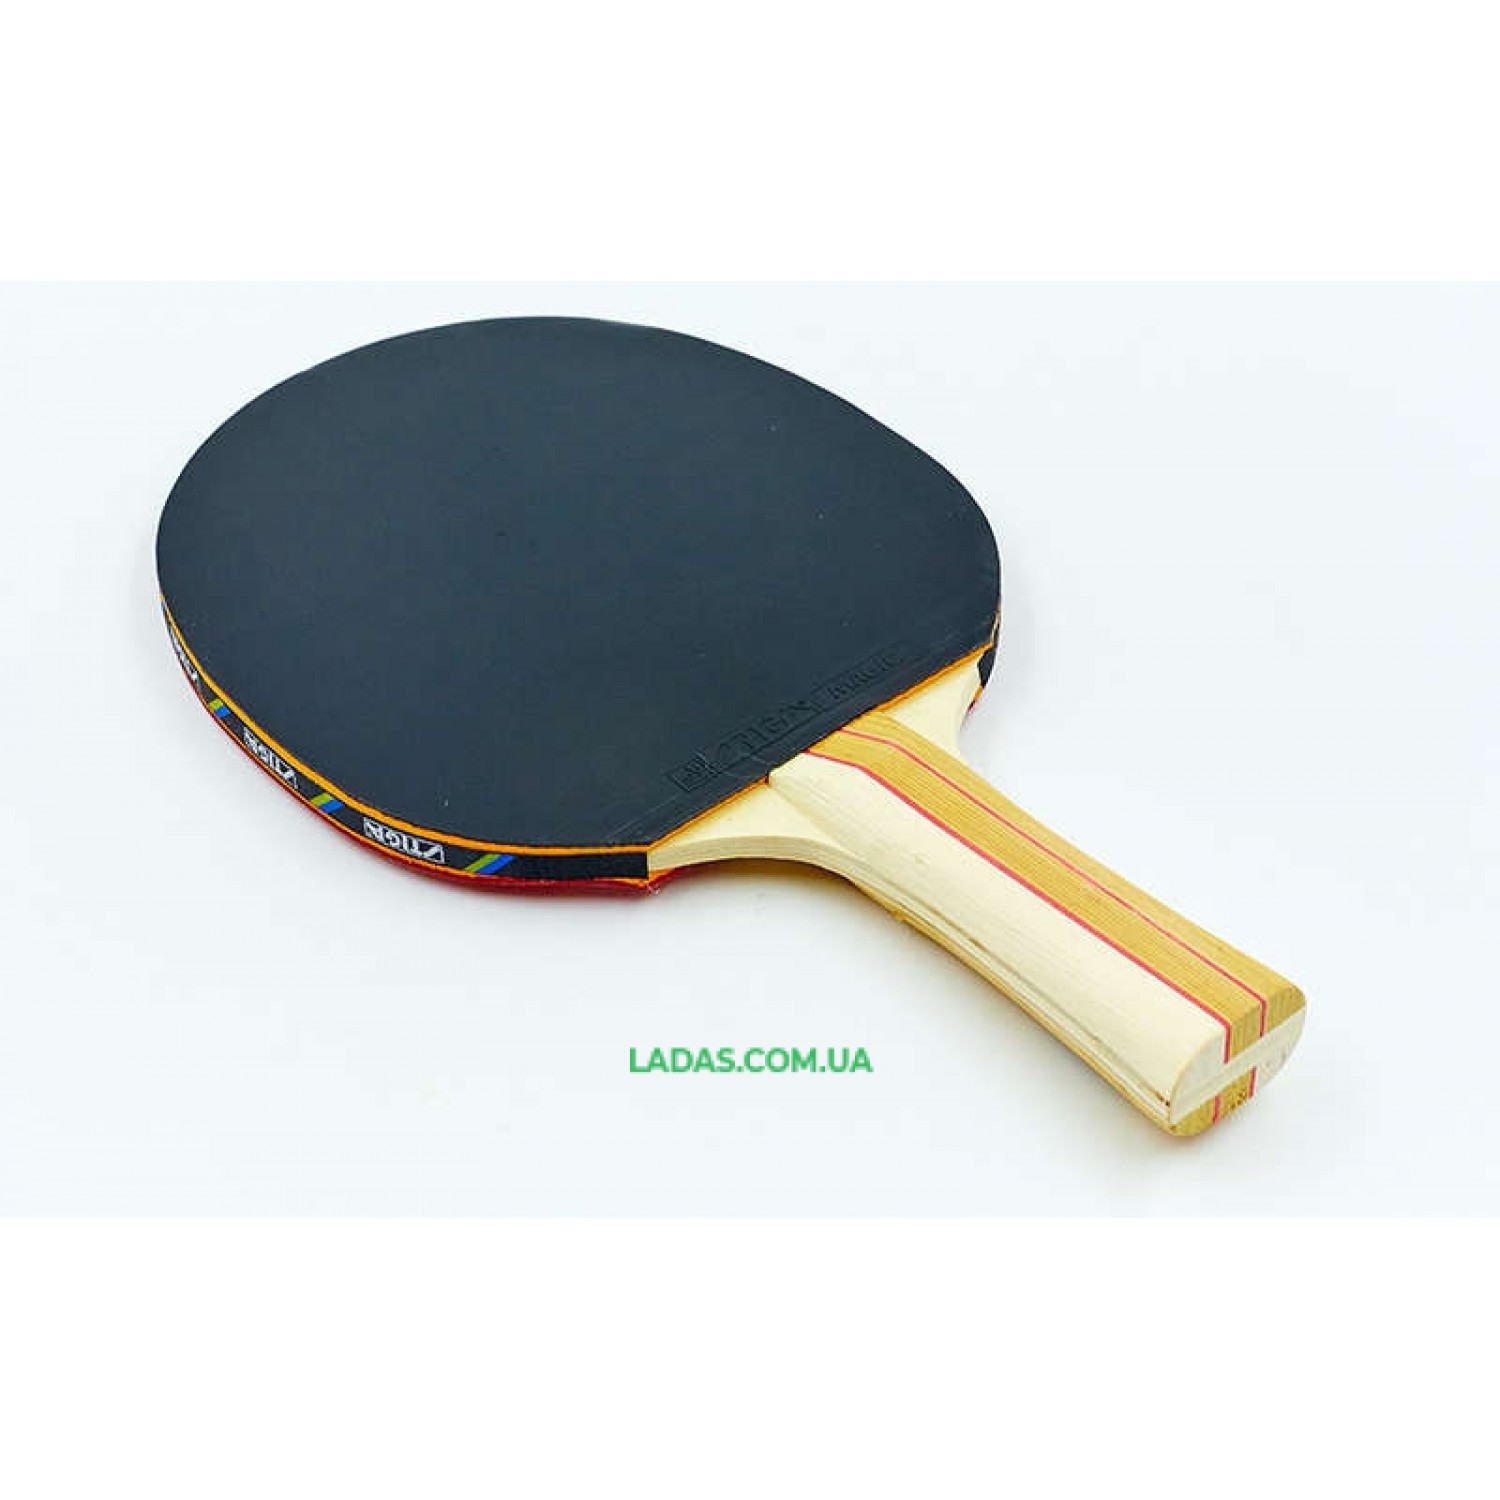 Набор для настольного тенниса 2 ракетки, 3 мяча STG FORCE( древесина, резина) Реплика